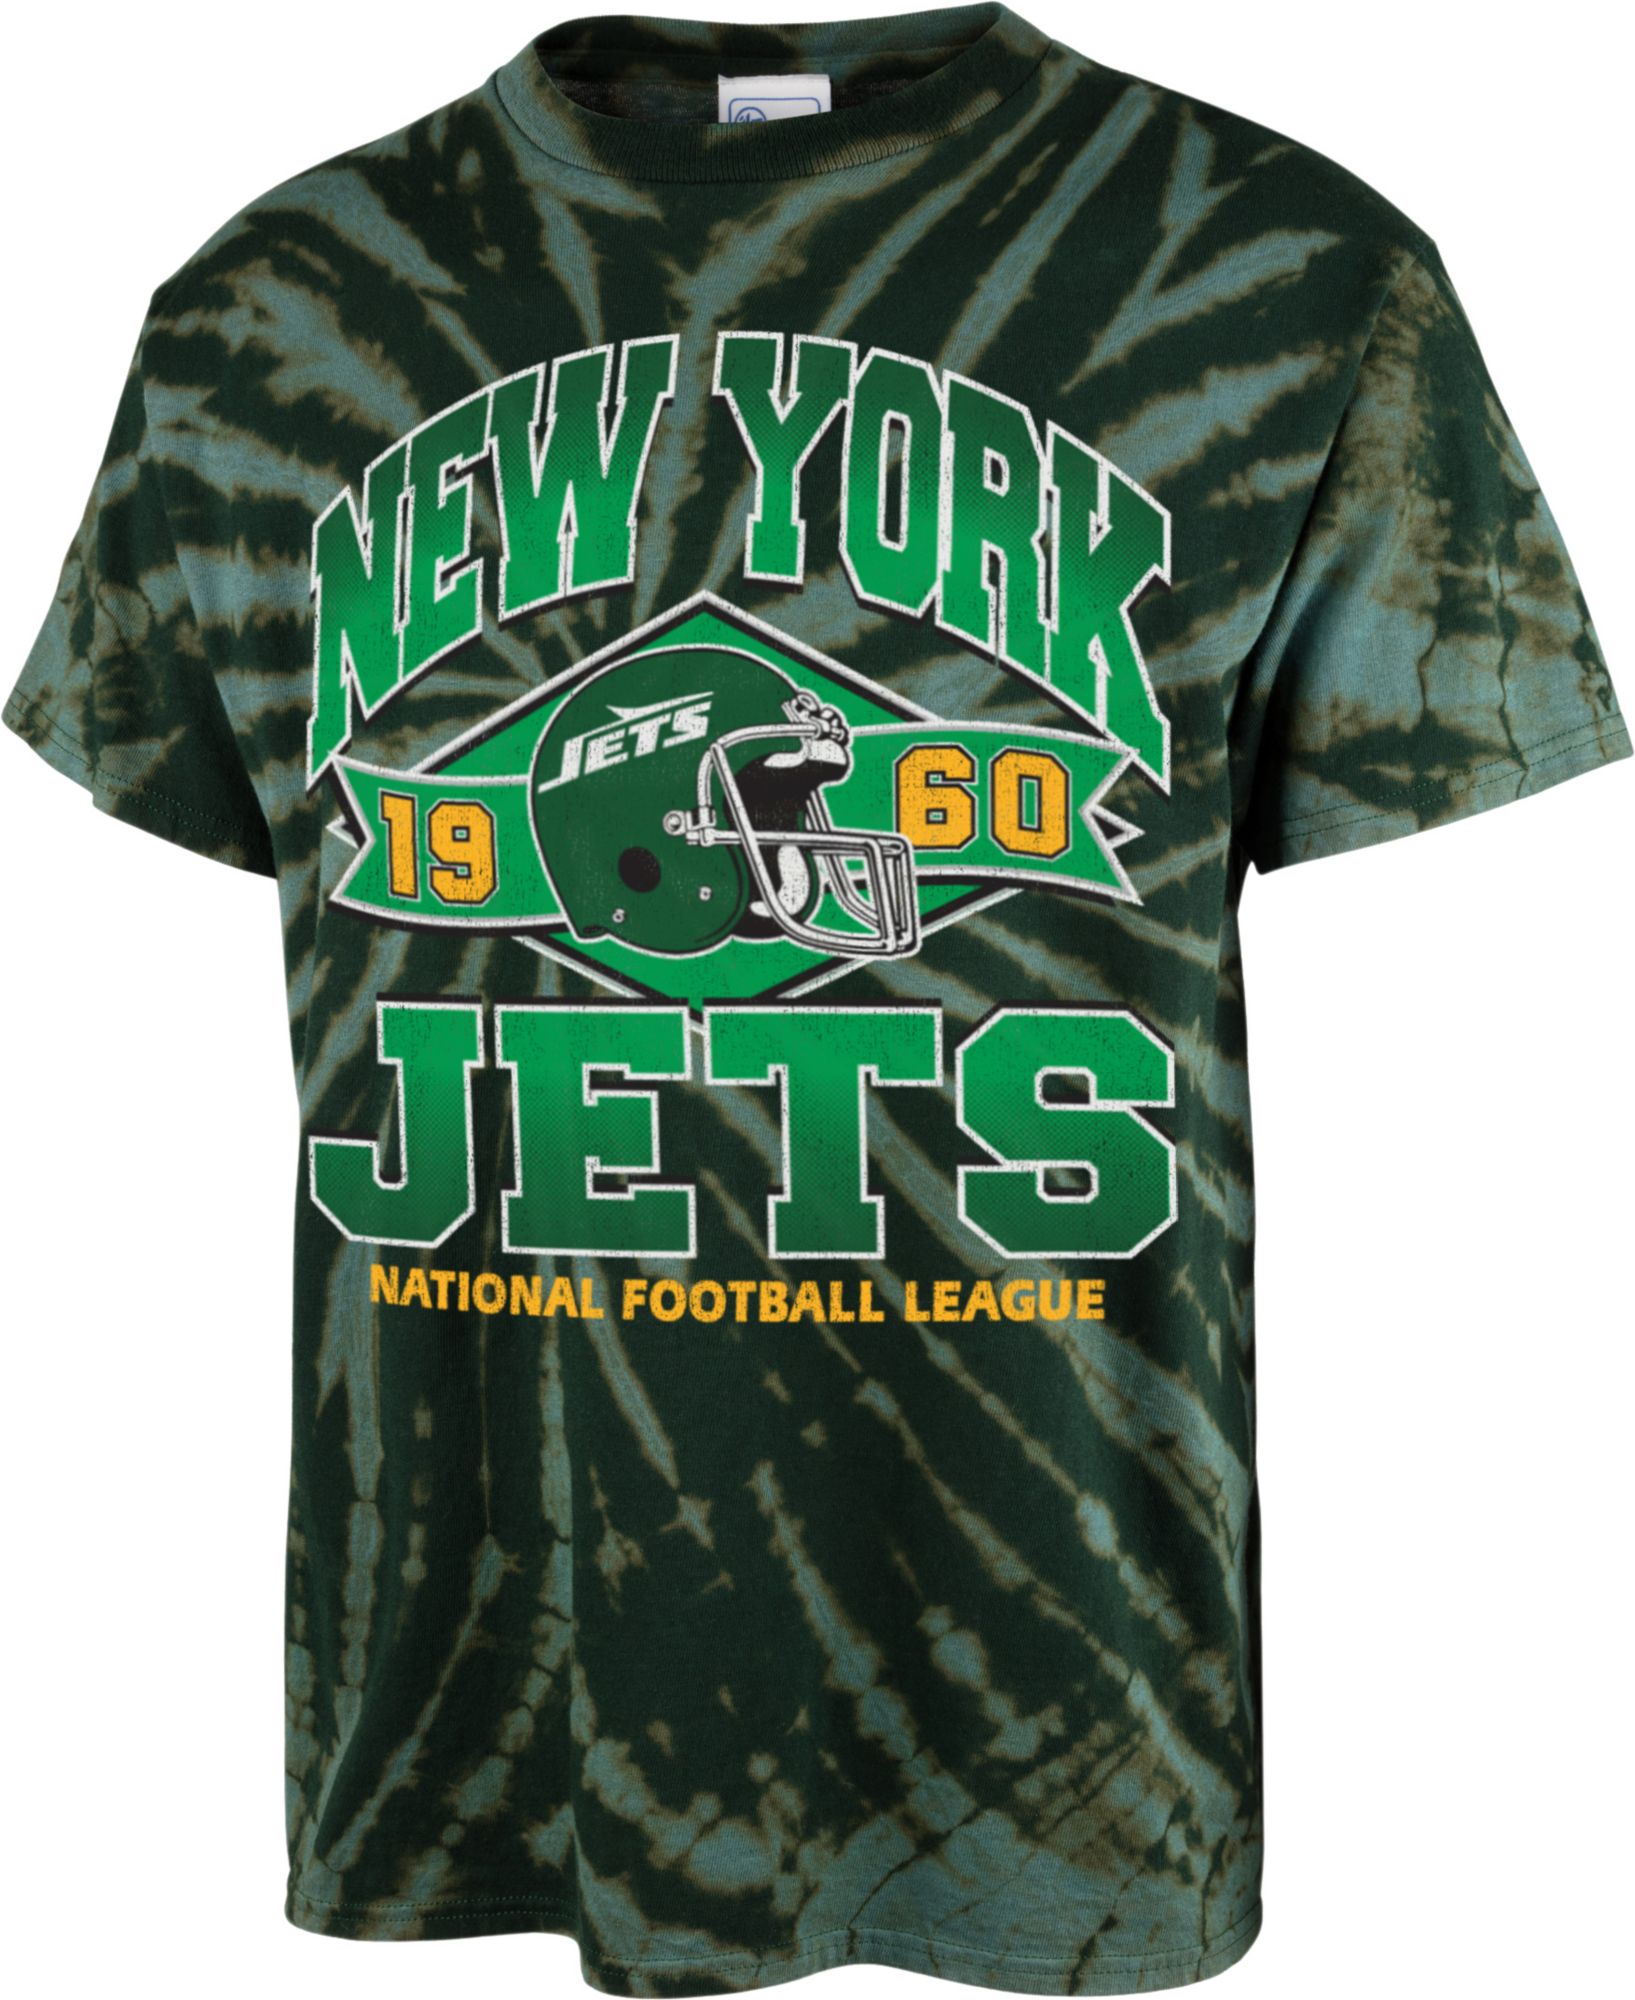 Men's New York Jets Tie Dye Tubular T-Shirt